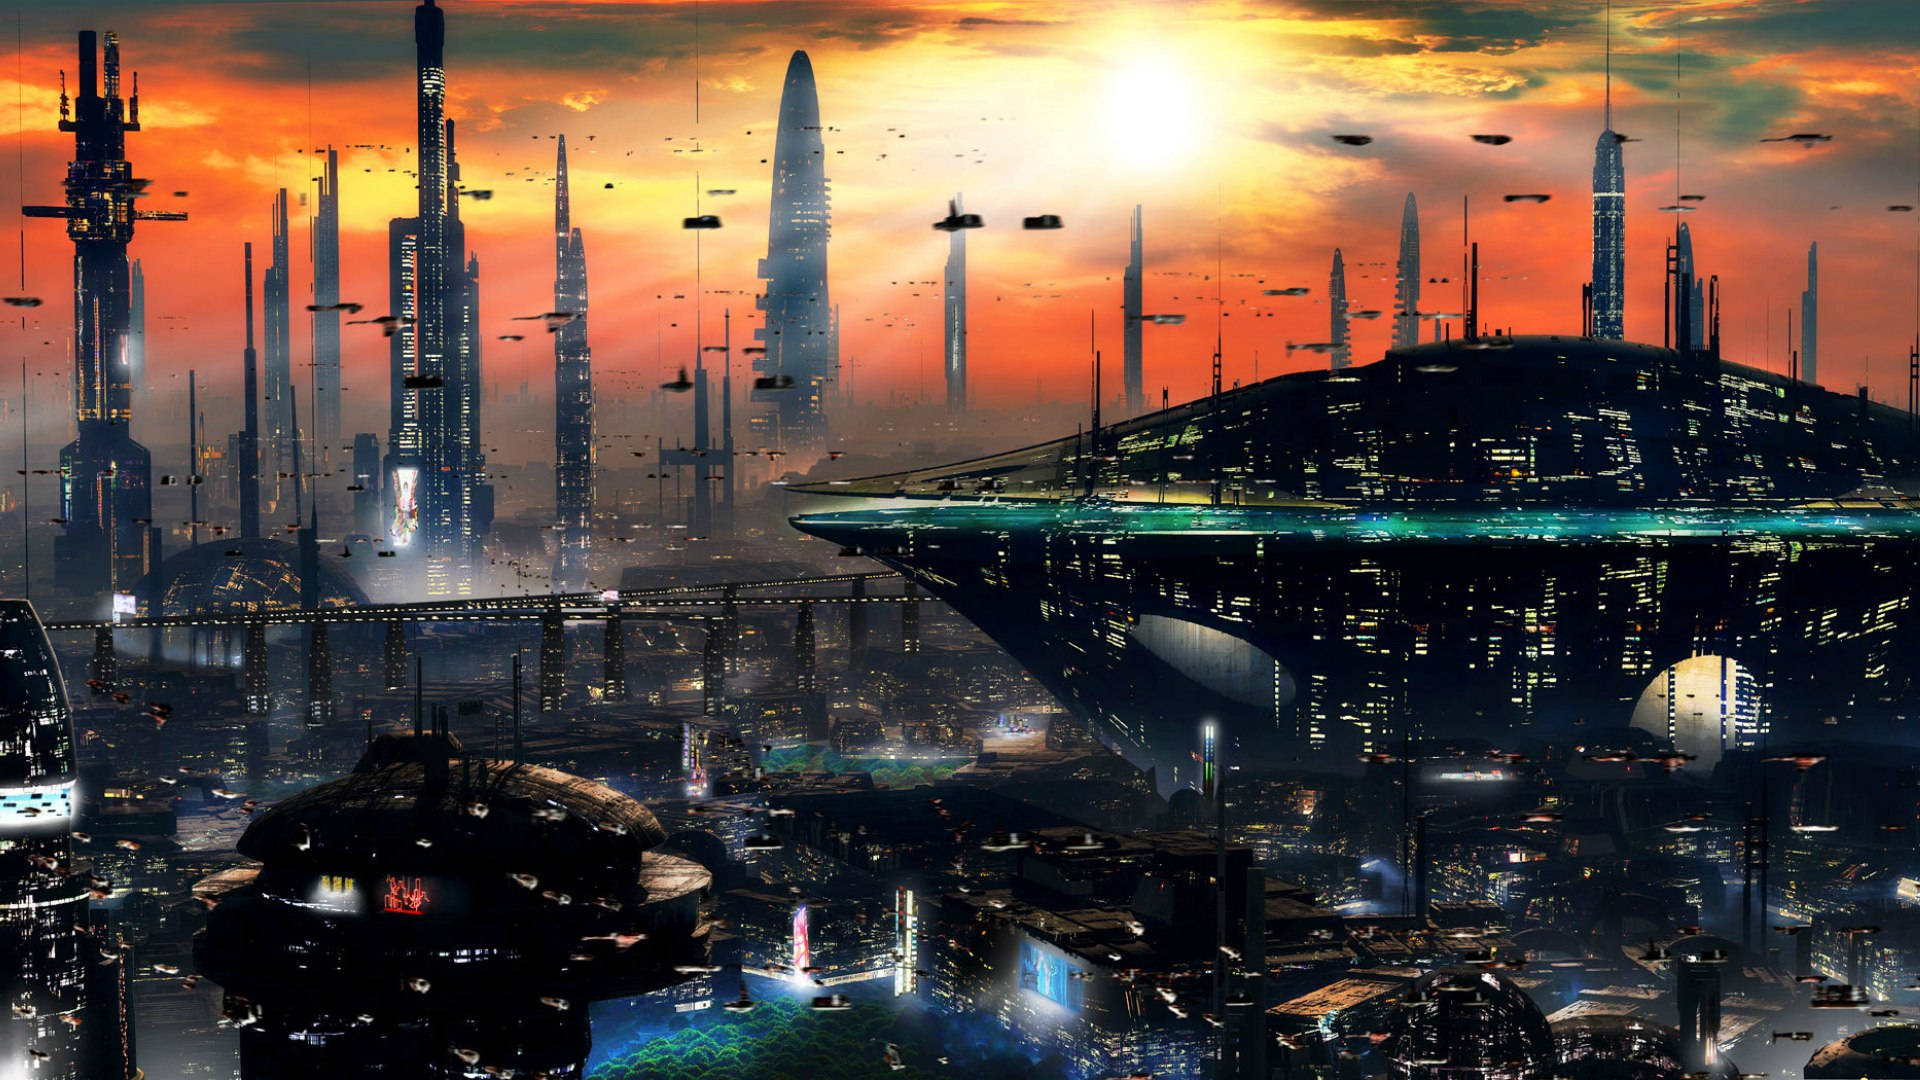 Sci Fi City Art Wallpaper